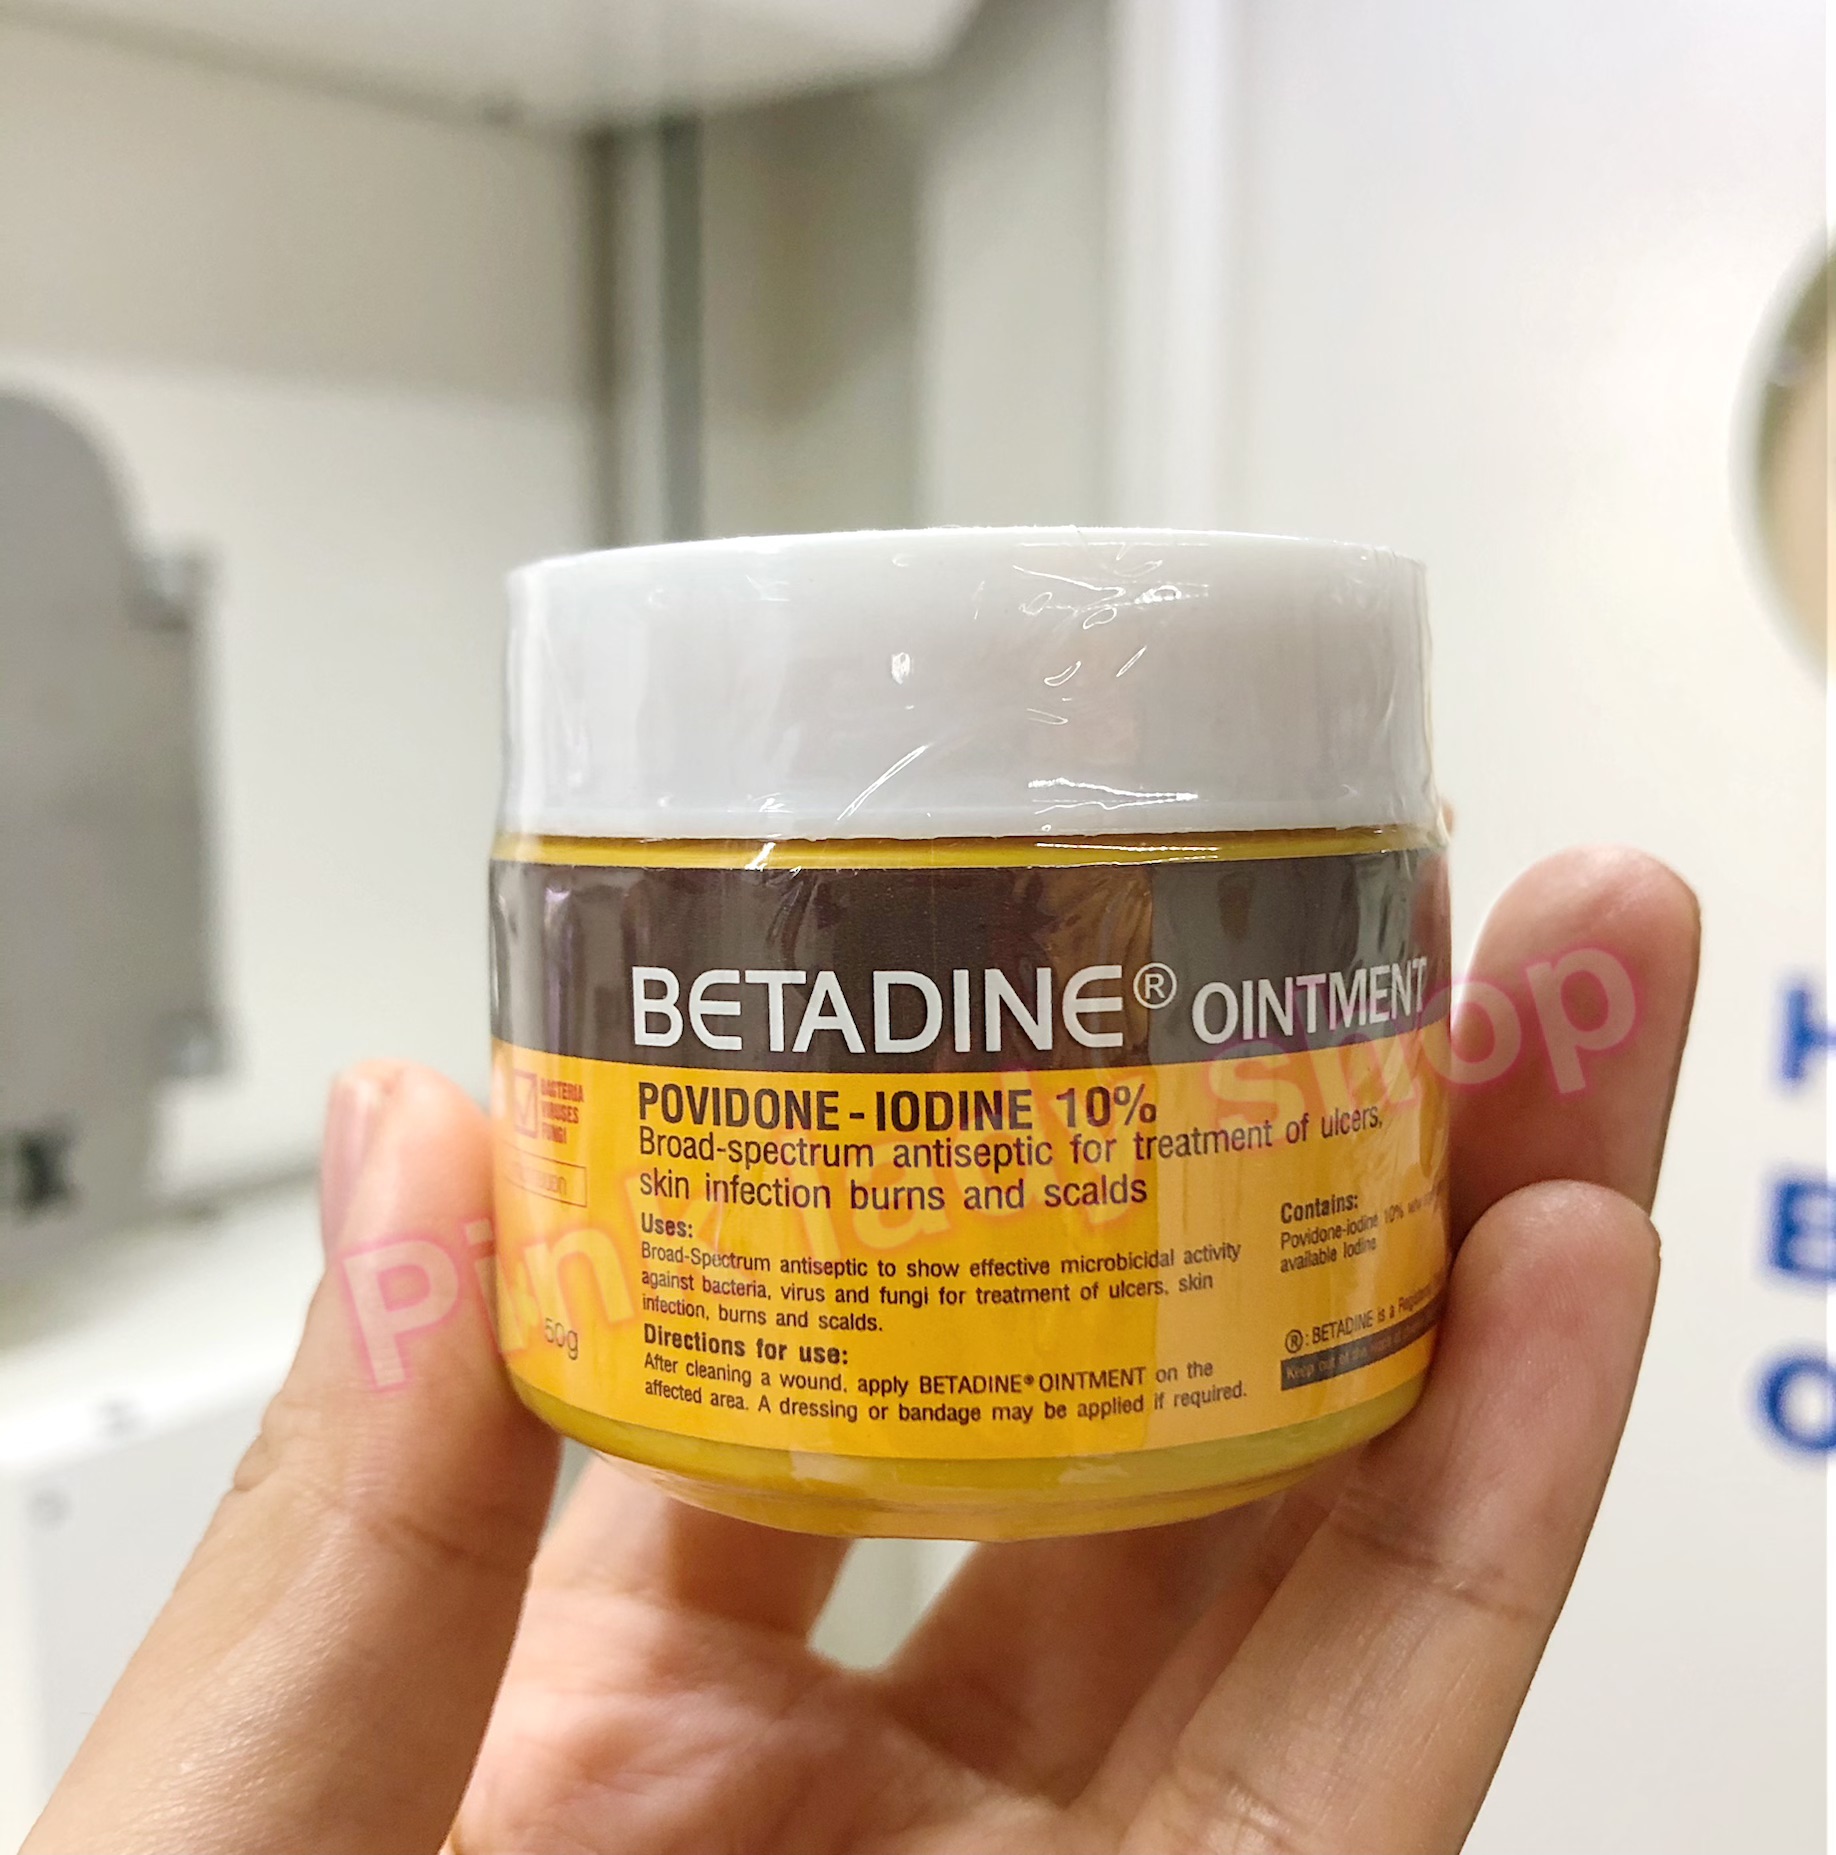 Betadine ointment 50 g / เบต้าตีนออยเม้นท์/ขี้ผึ้งเบต้าดีน